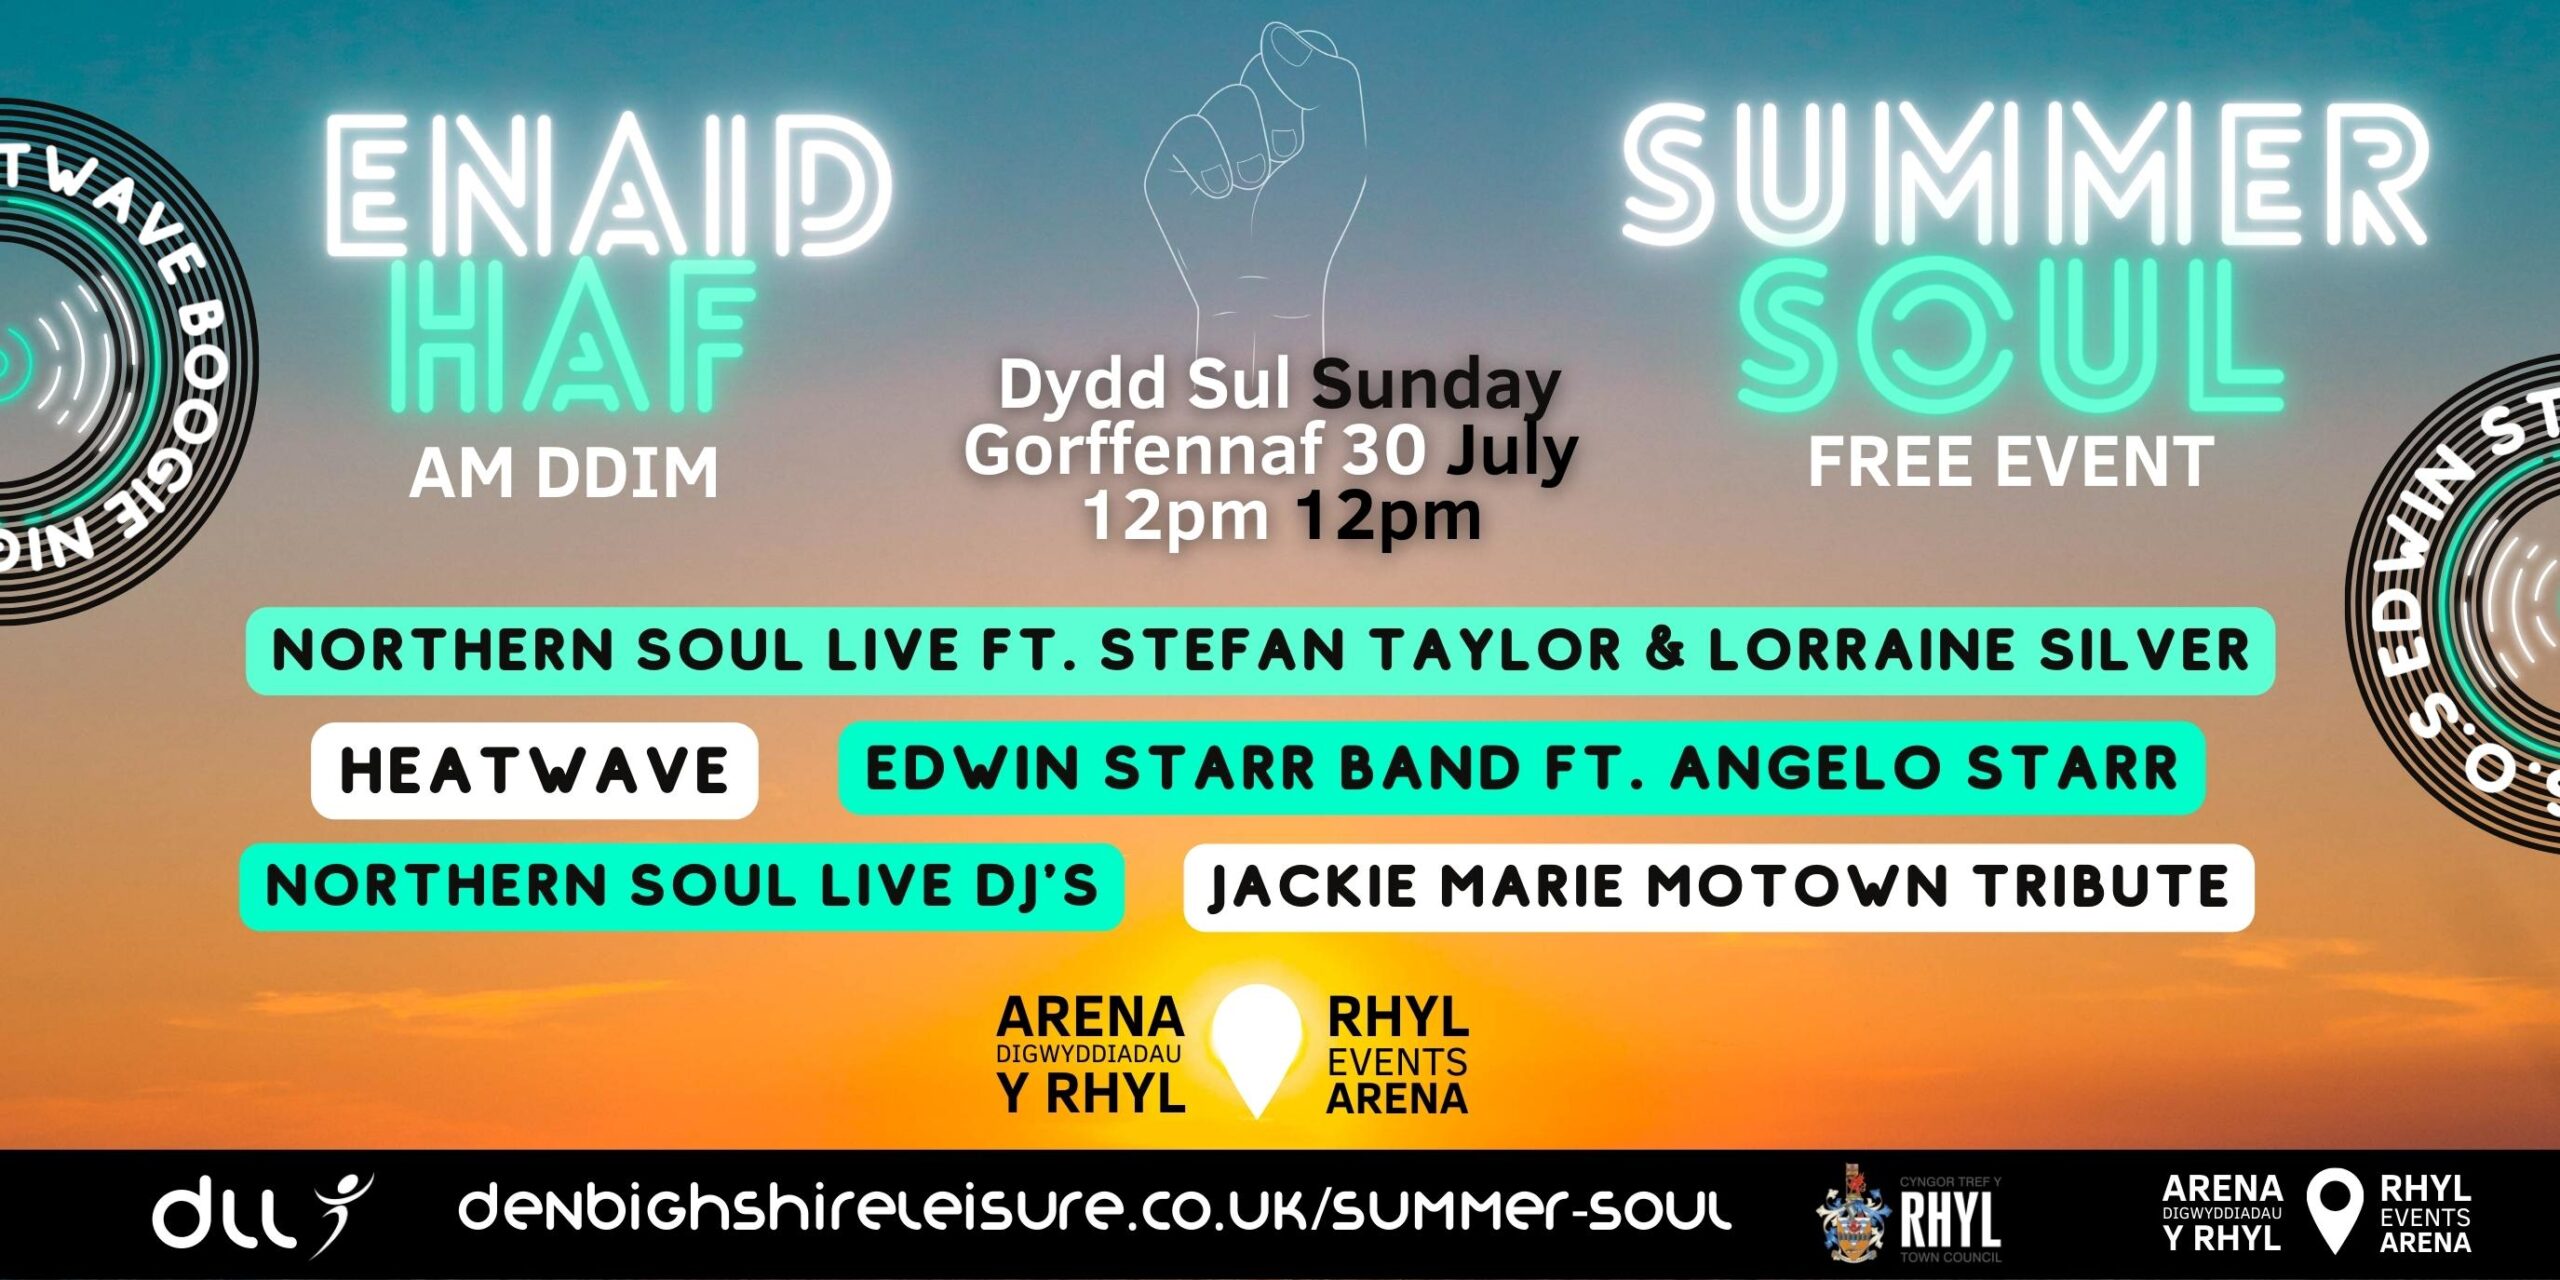 FREE Rhyl Summer Soul concert lineup announced by DLL Denbighshire